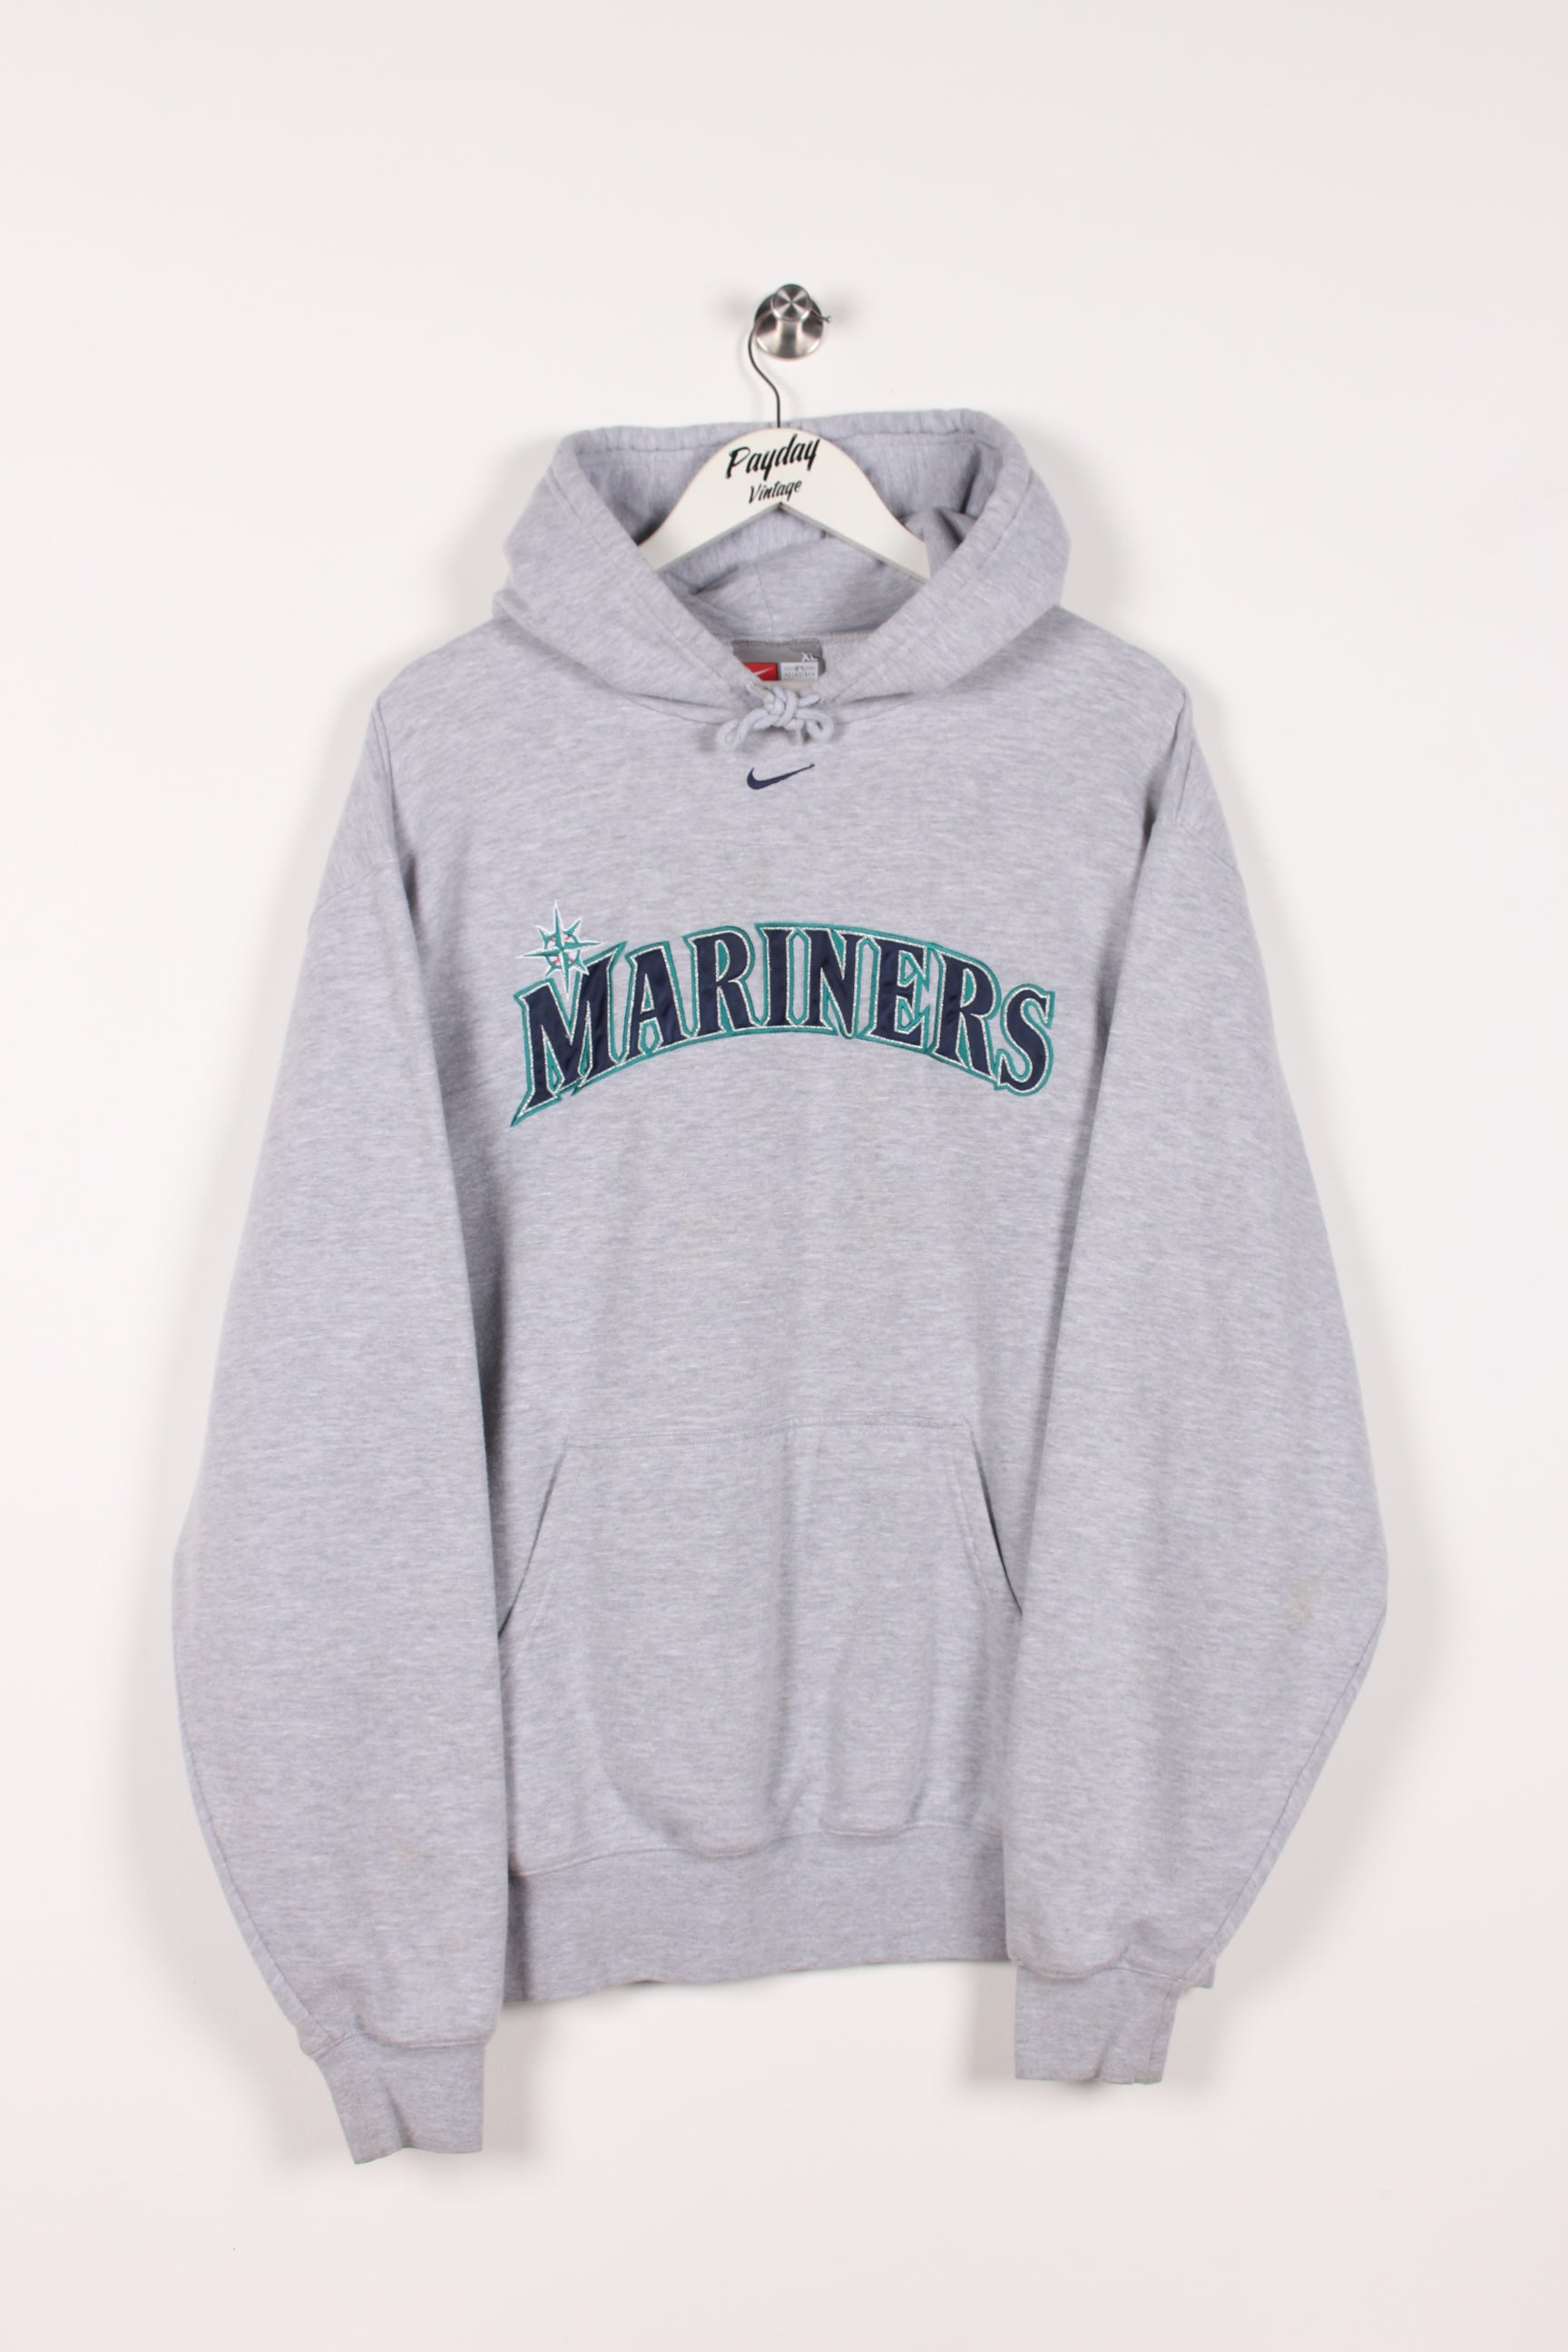 90s Seattle mariners vintage MLB hoodie. Navy and gray. Large